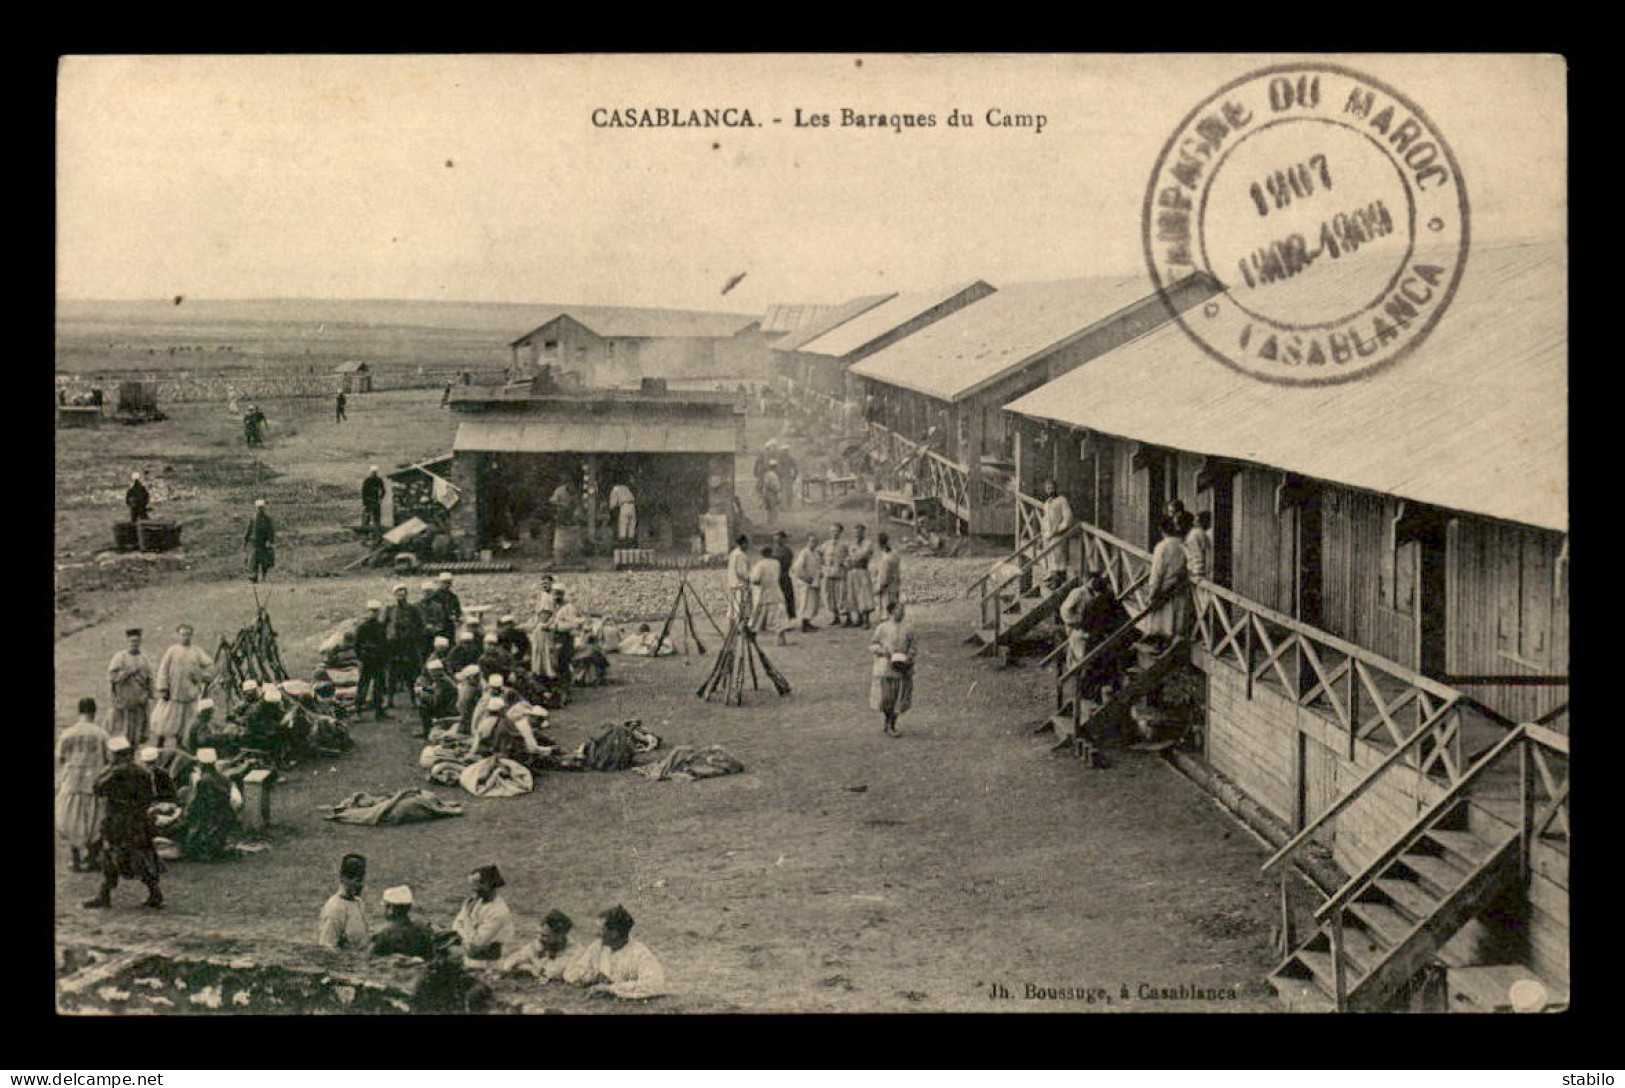 MAROC - CASABLANCA - LES BARAQUEMENTS DU CAMP - CACHET CAMPAGNE DU MAROC 1907-09 - Casablanca